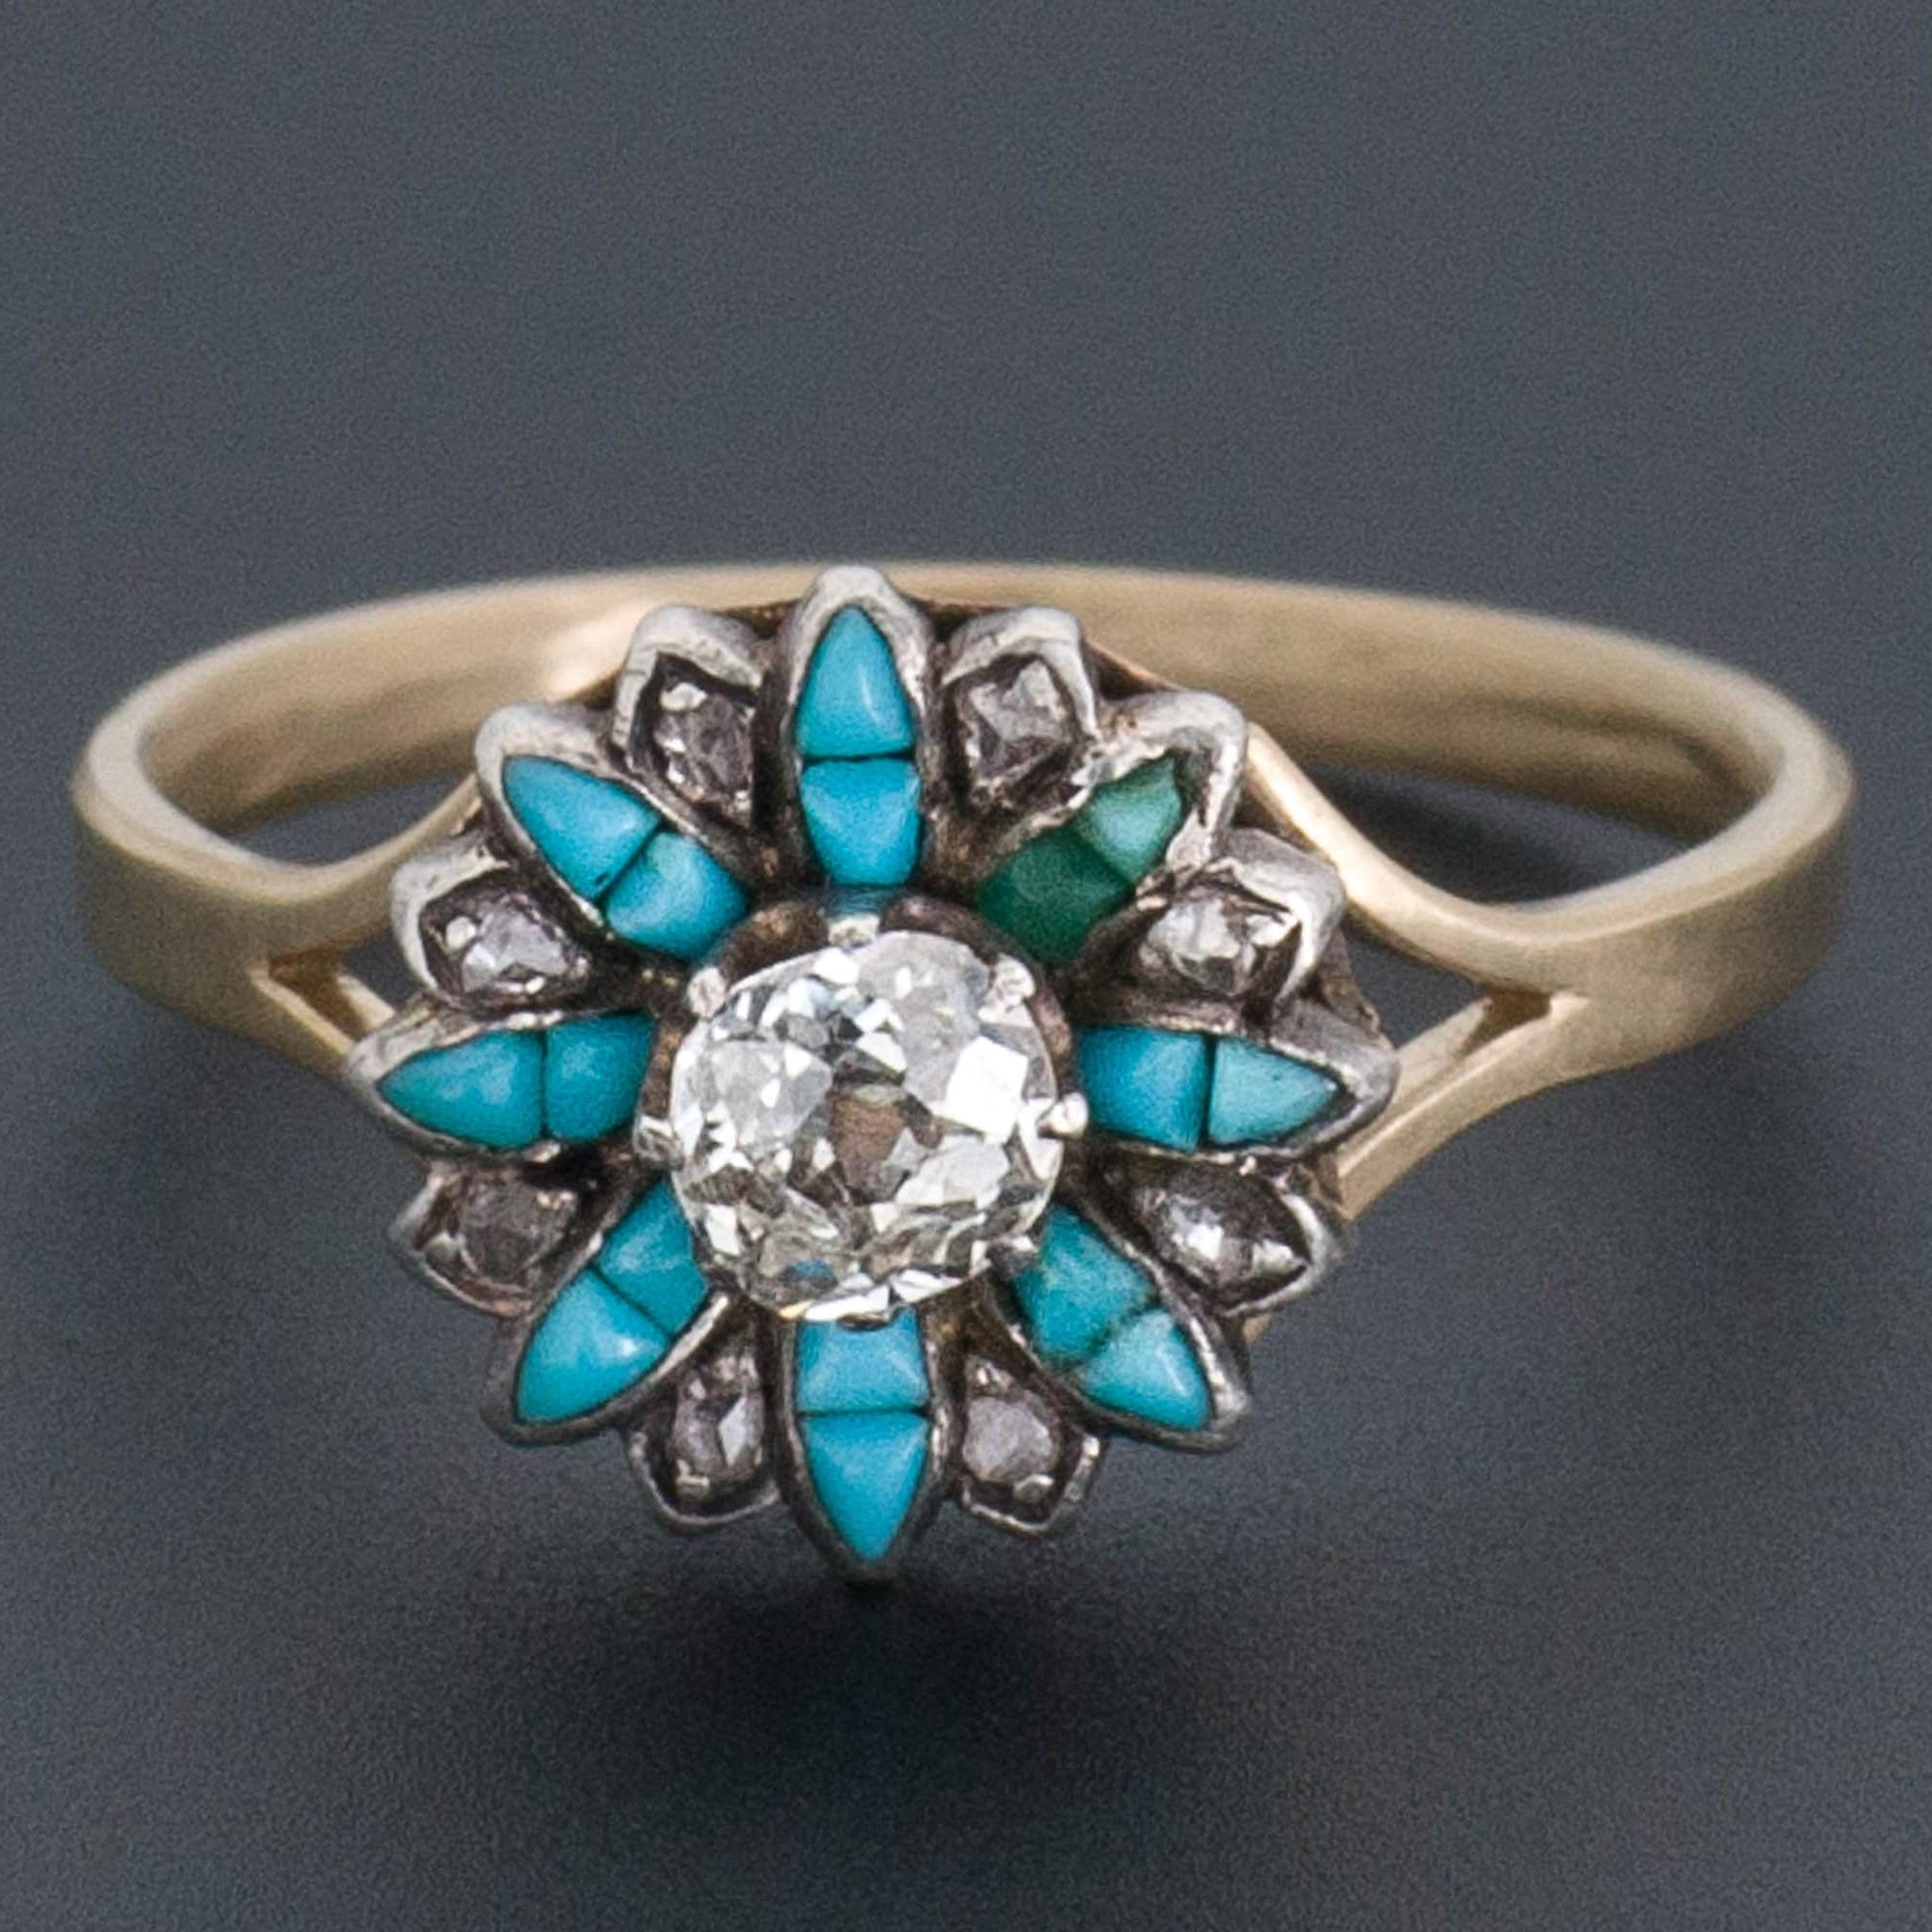 Antique Turquoise & Diamond Ring | 14k Gold Ring 